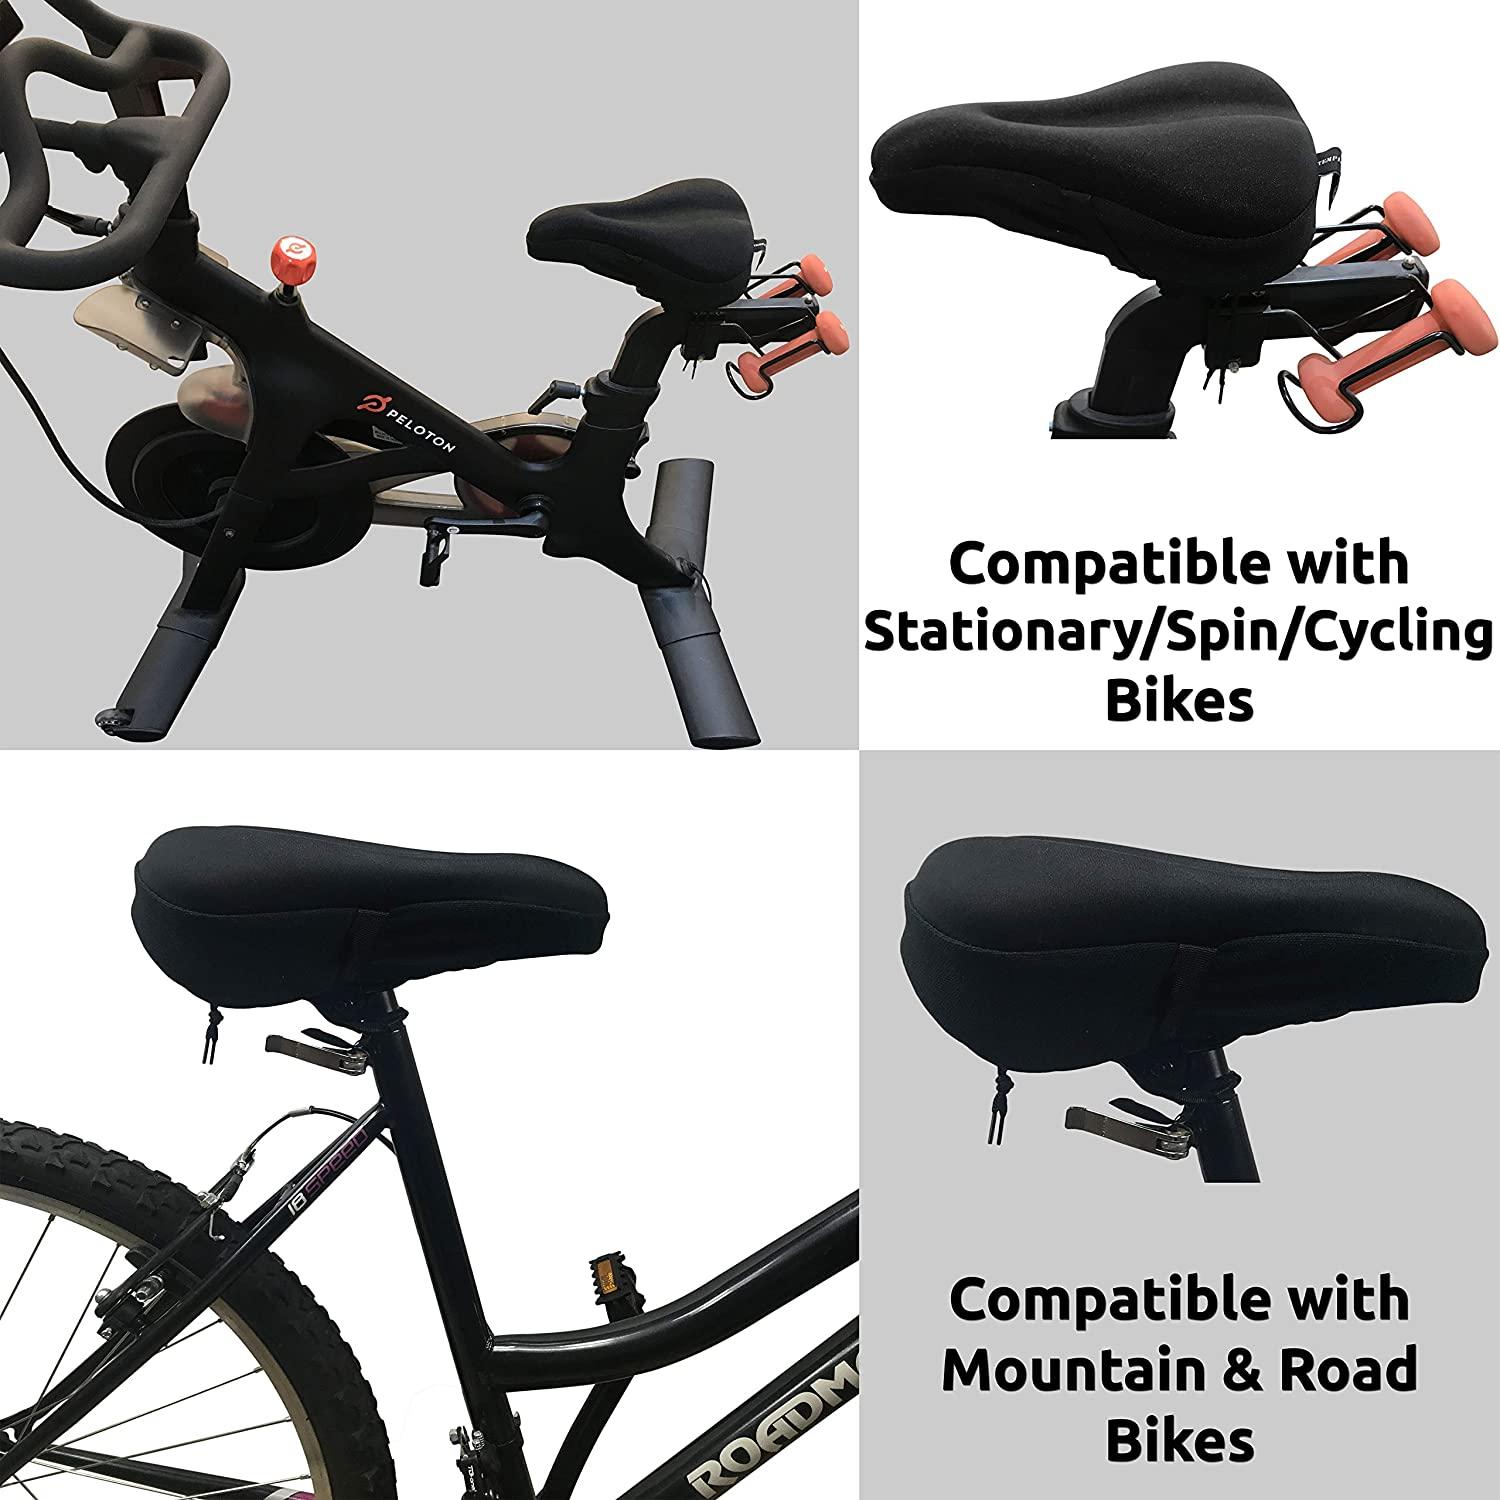 NEOPRENE Recumbent Bike Seat Pad - Cushion - Exercise - Cover - Universal  Size